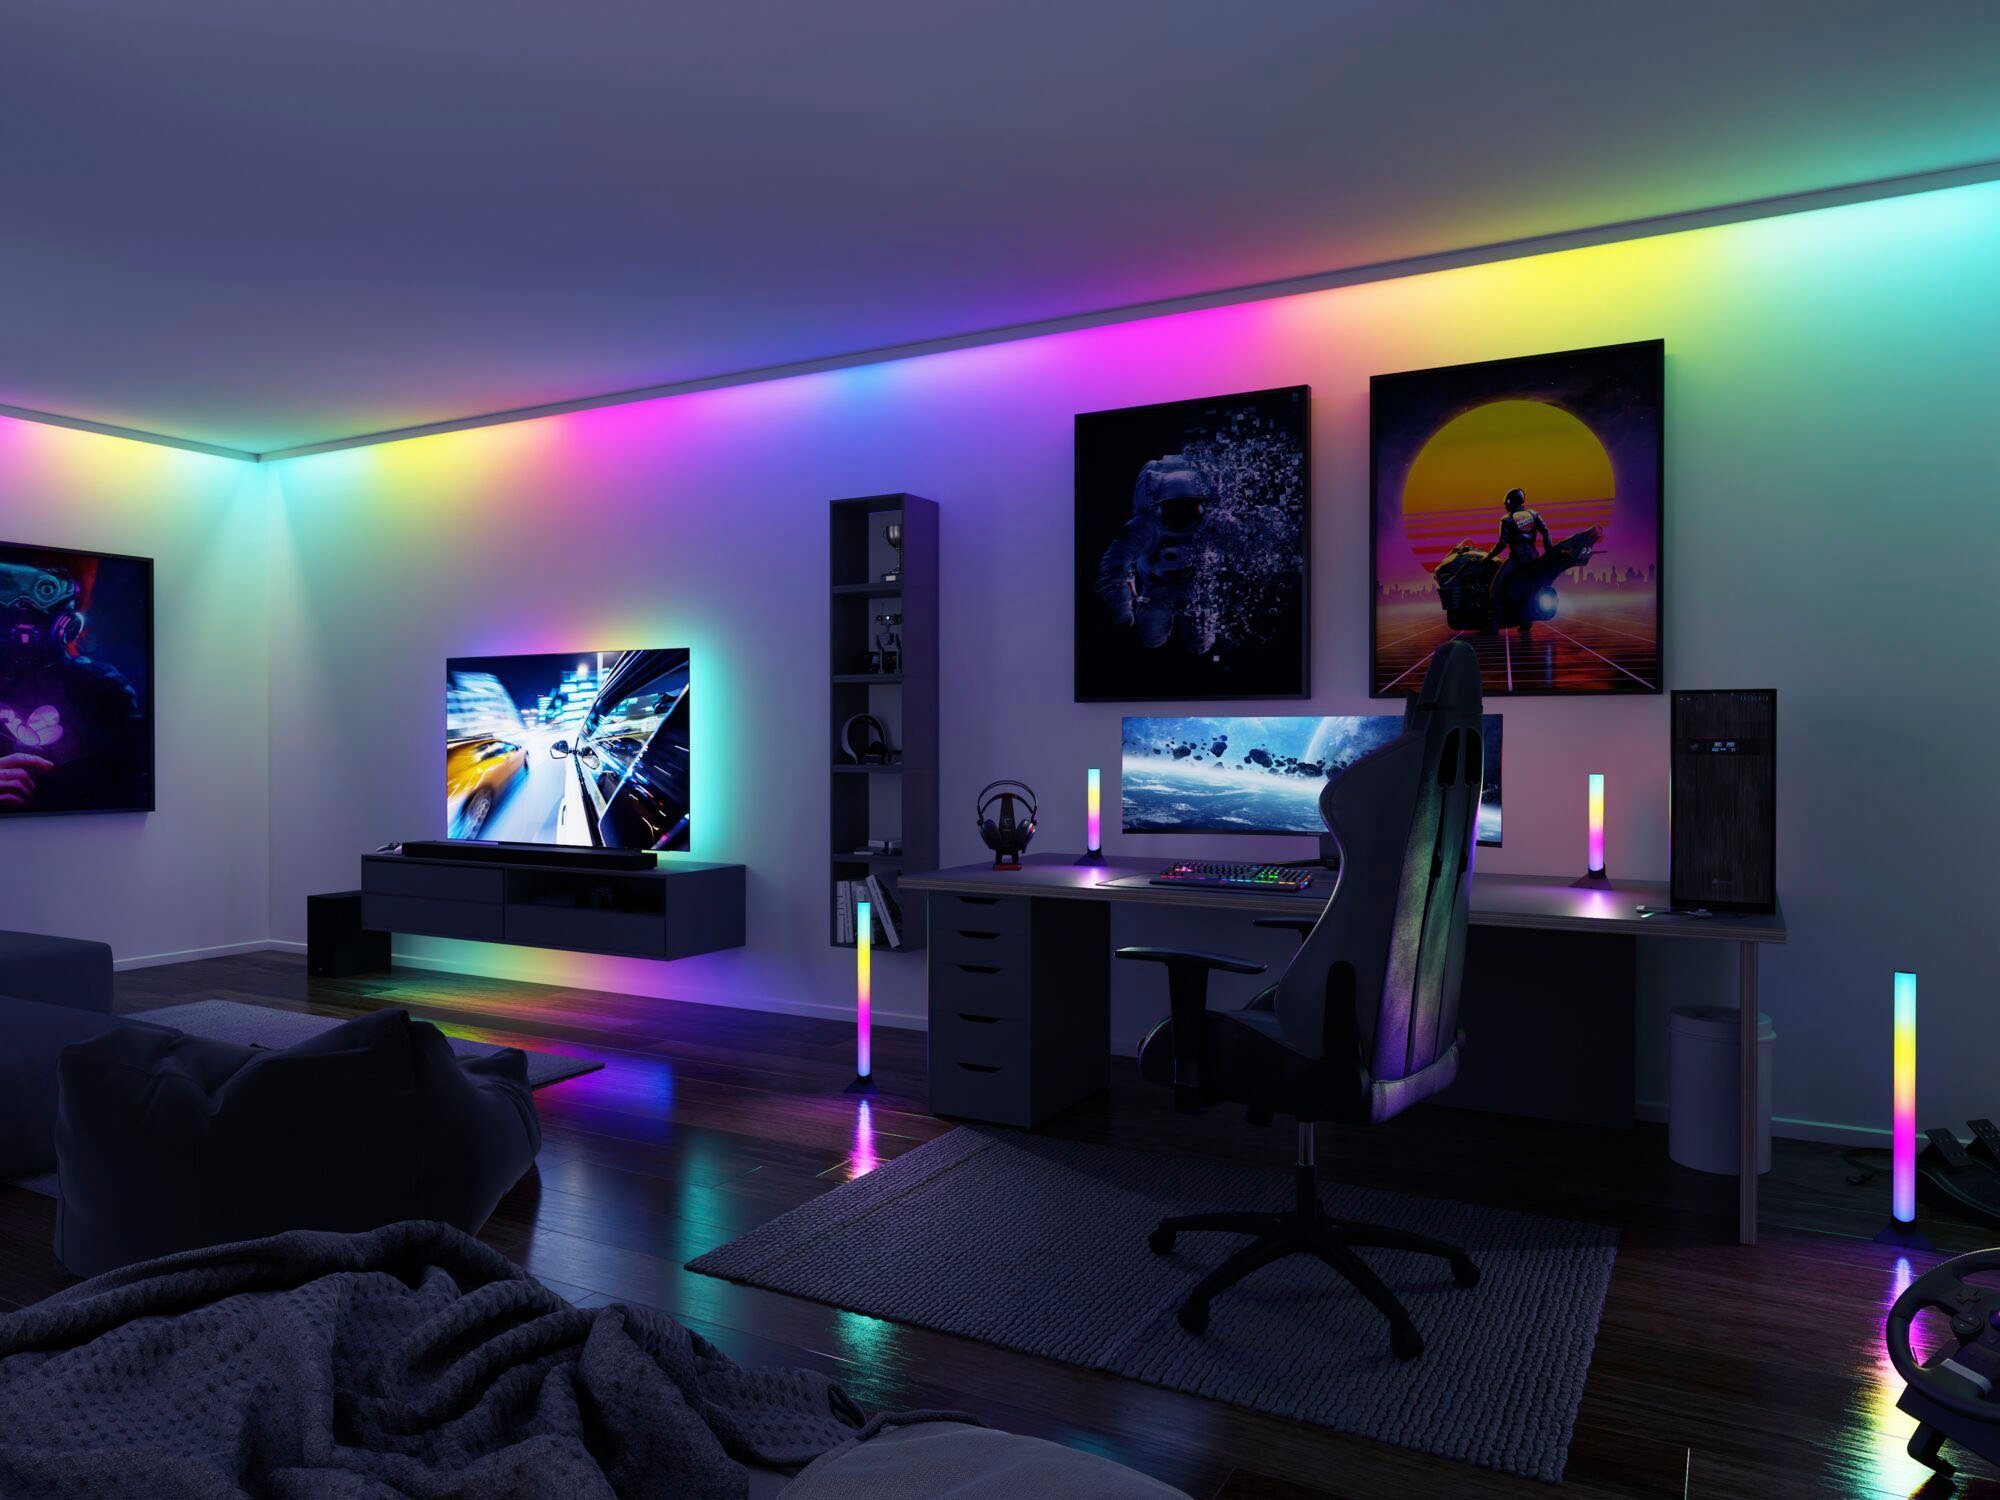 Paulmann EntertainLED 2-flammig LED-Streifen Rainbow 30x30mm 2x0,6W Dynamic RGB 2x24lm, Lightbar